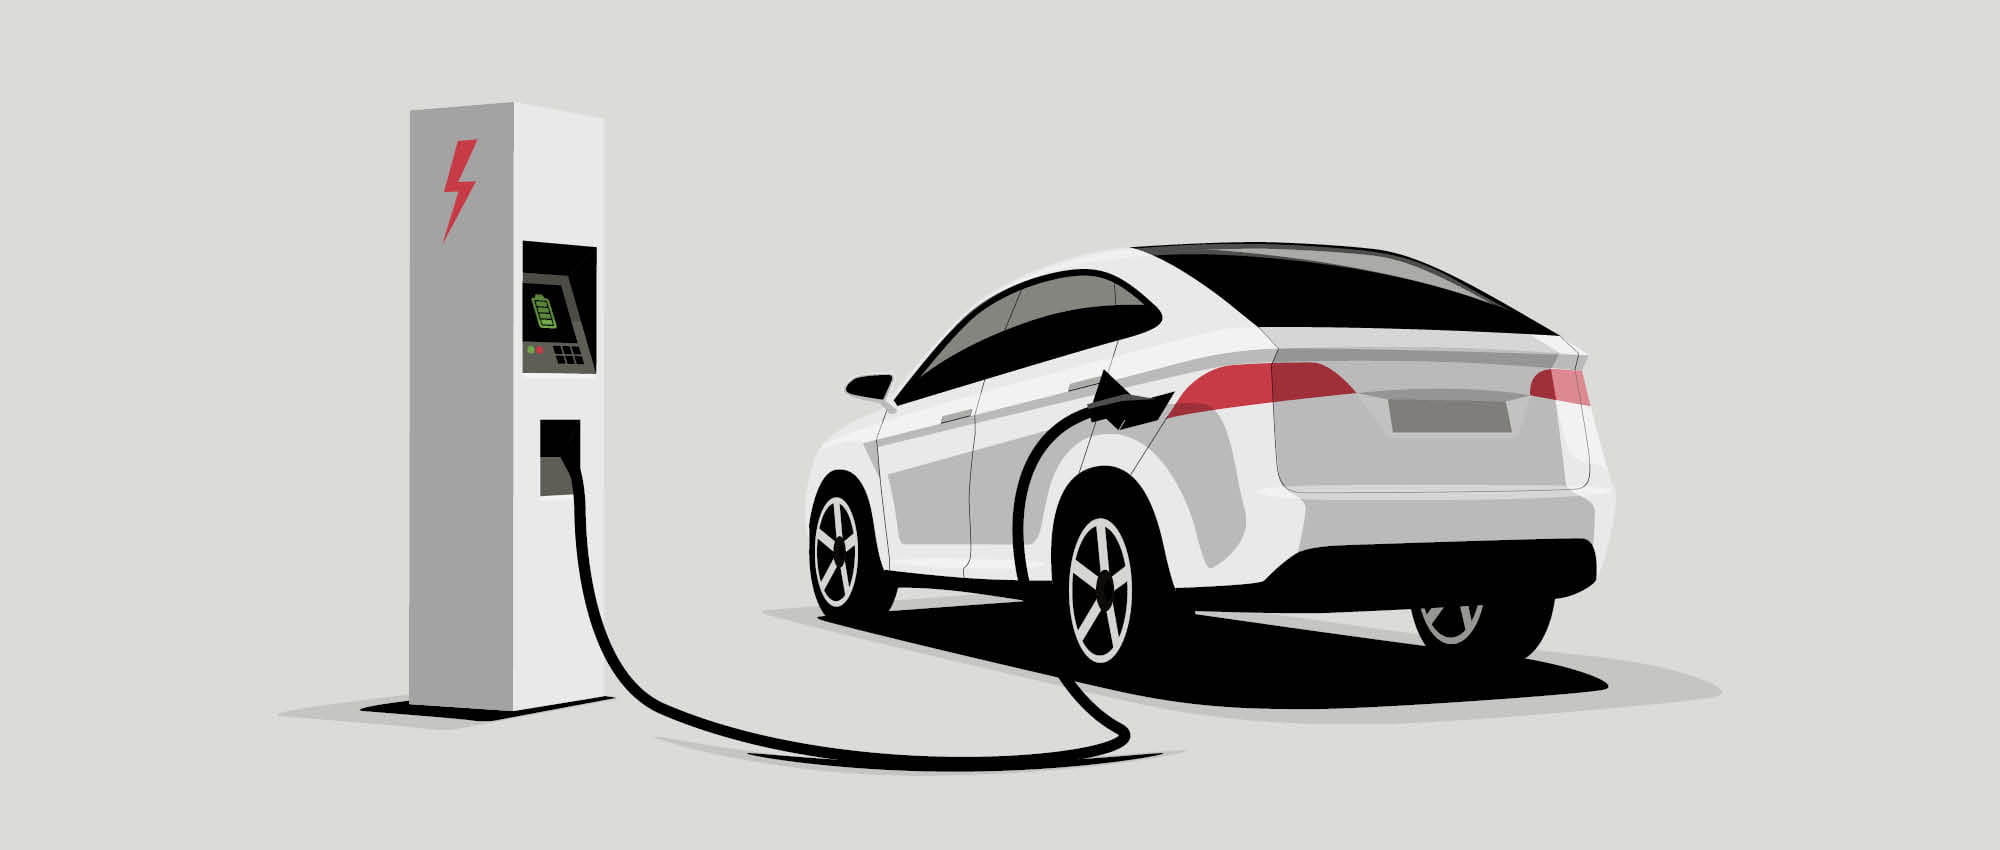 Illustration of an e-car at a charging station. Copyright: Shutterstock/petovarga 